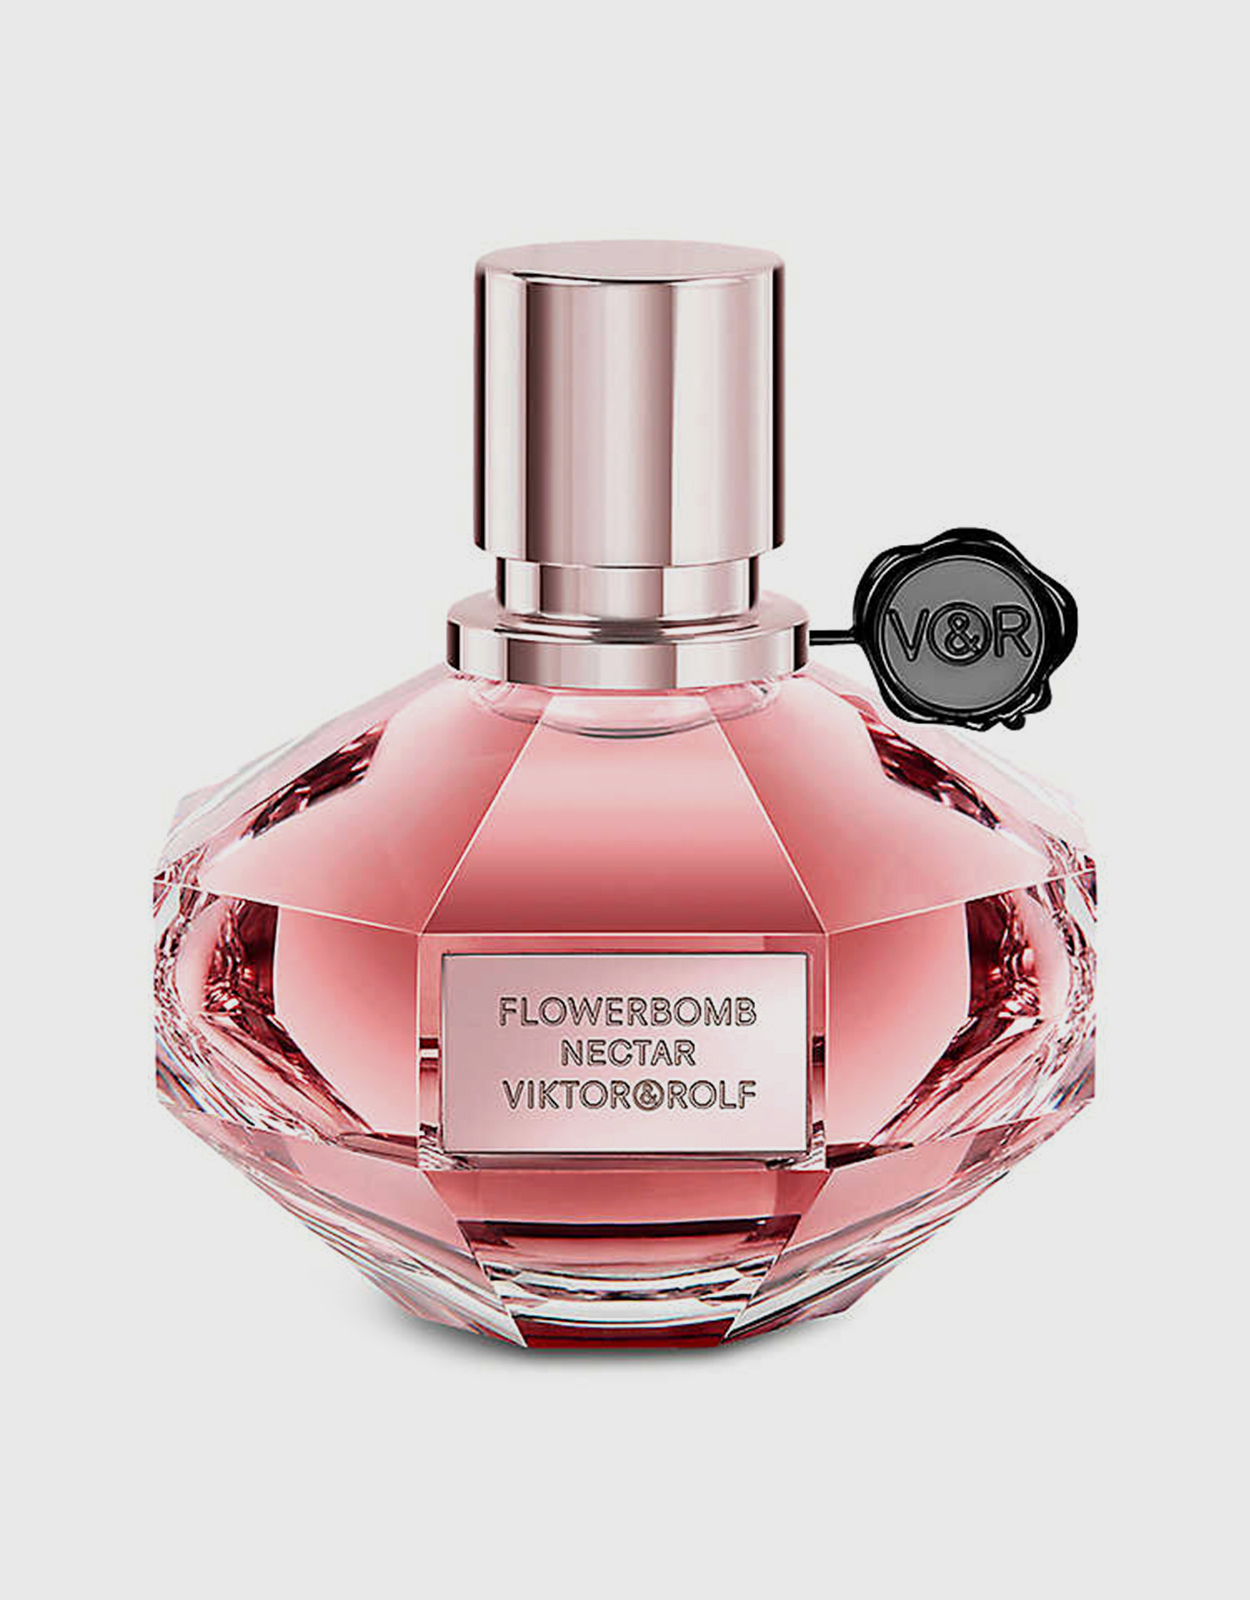 Viktor Rolf Flowerbomb Nectar Eau De Parfum 90ml Fragrance Ifchic Com